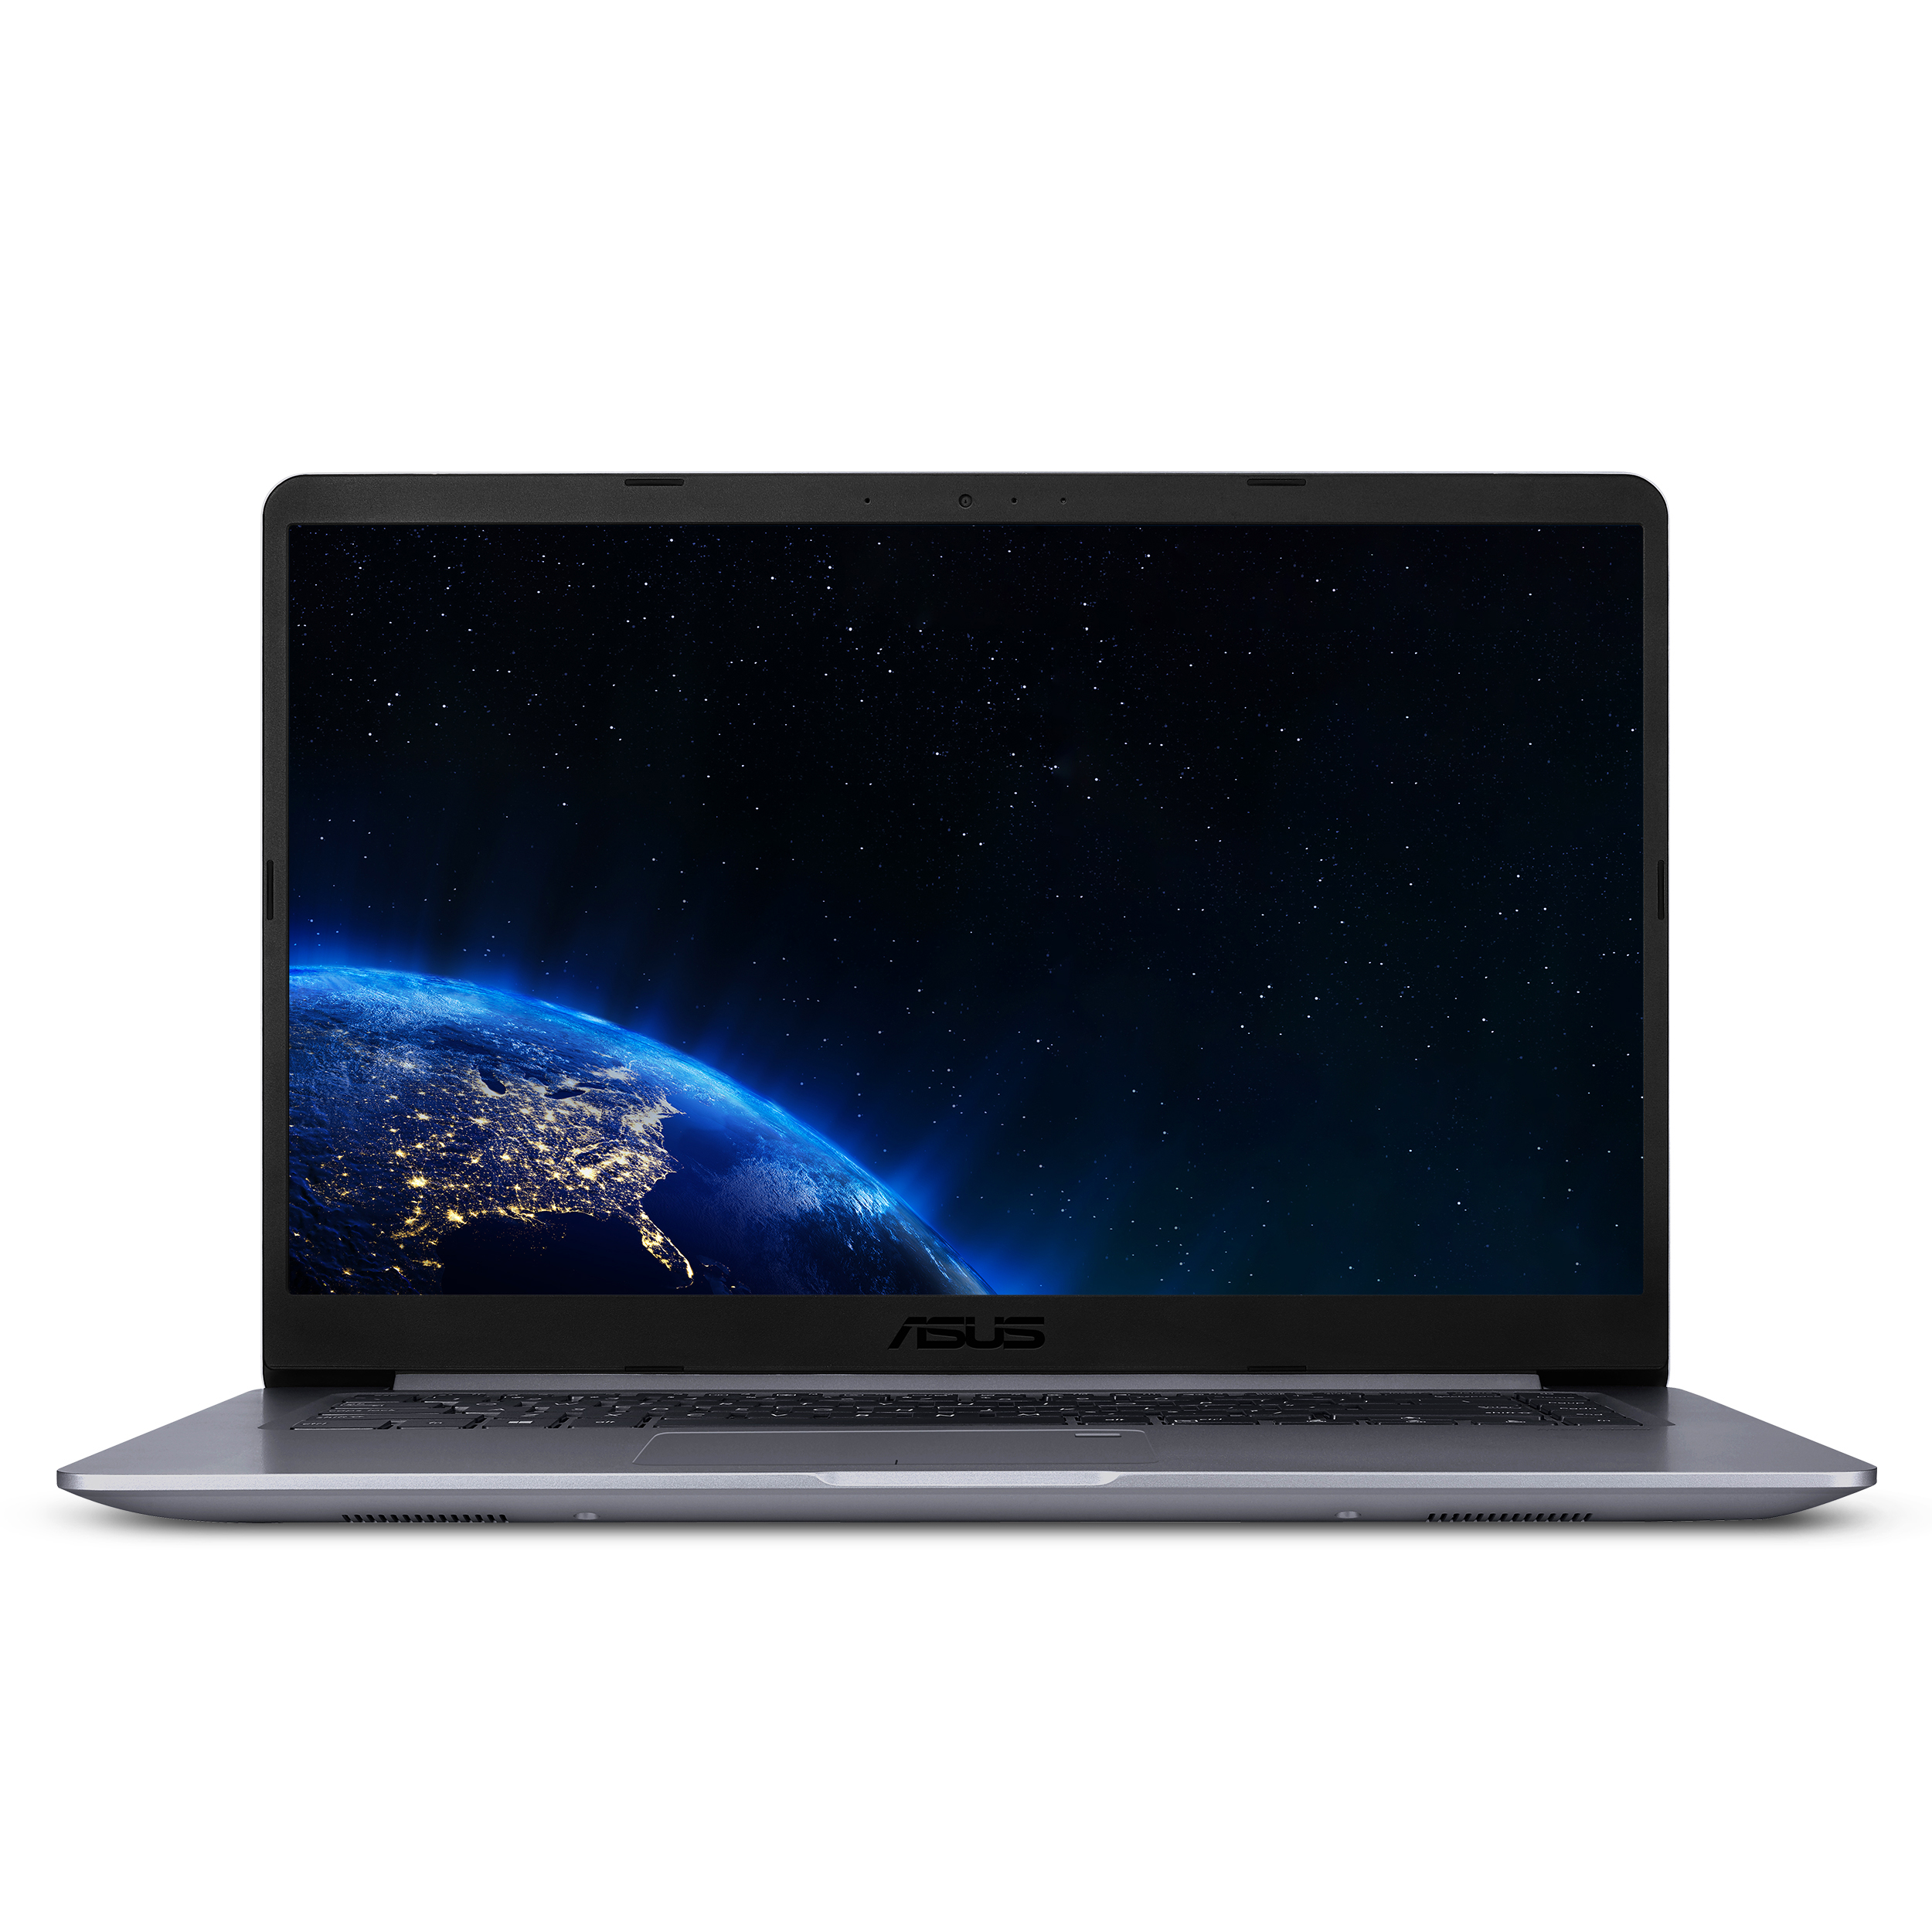 Asus VivoBook 15.6" FHD Laptop (Quad A12-9720P / 4GB / 128GB SSD)